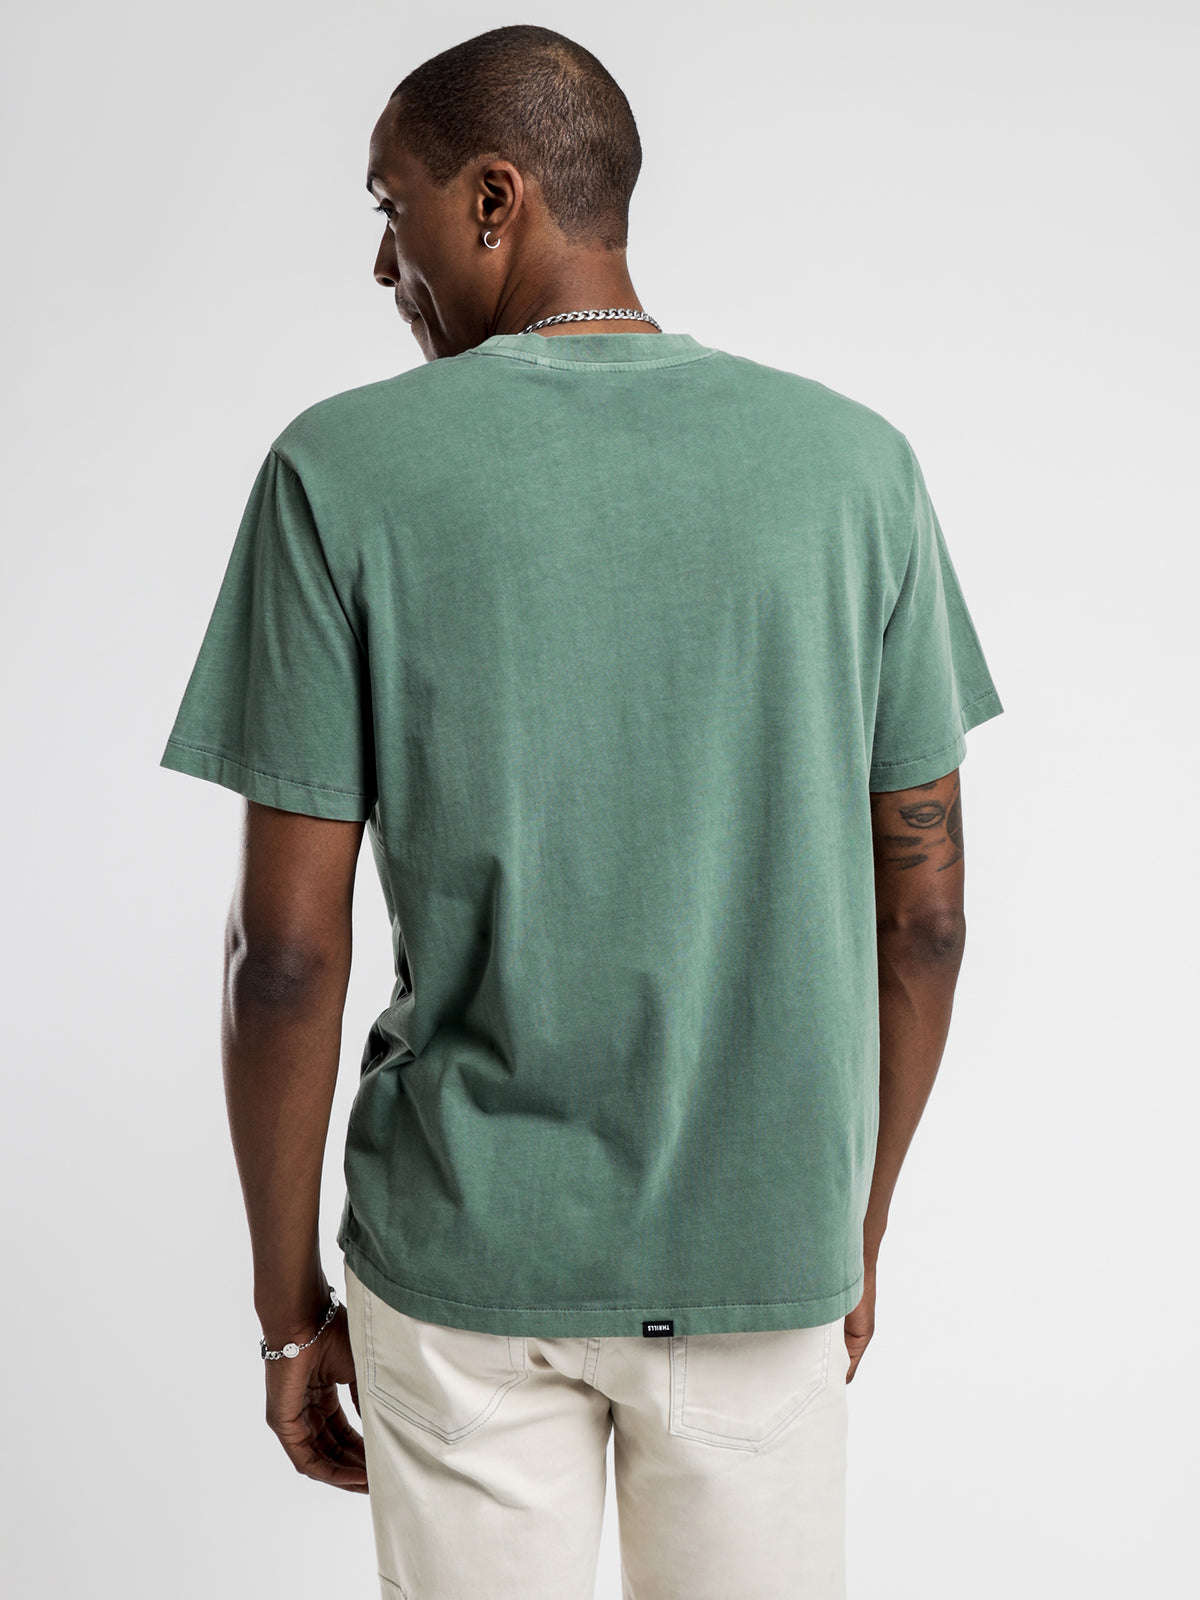 Minimal Thrills Merch Fit T-Shirt in Lume Green - Glue Store